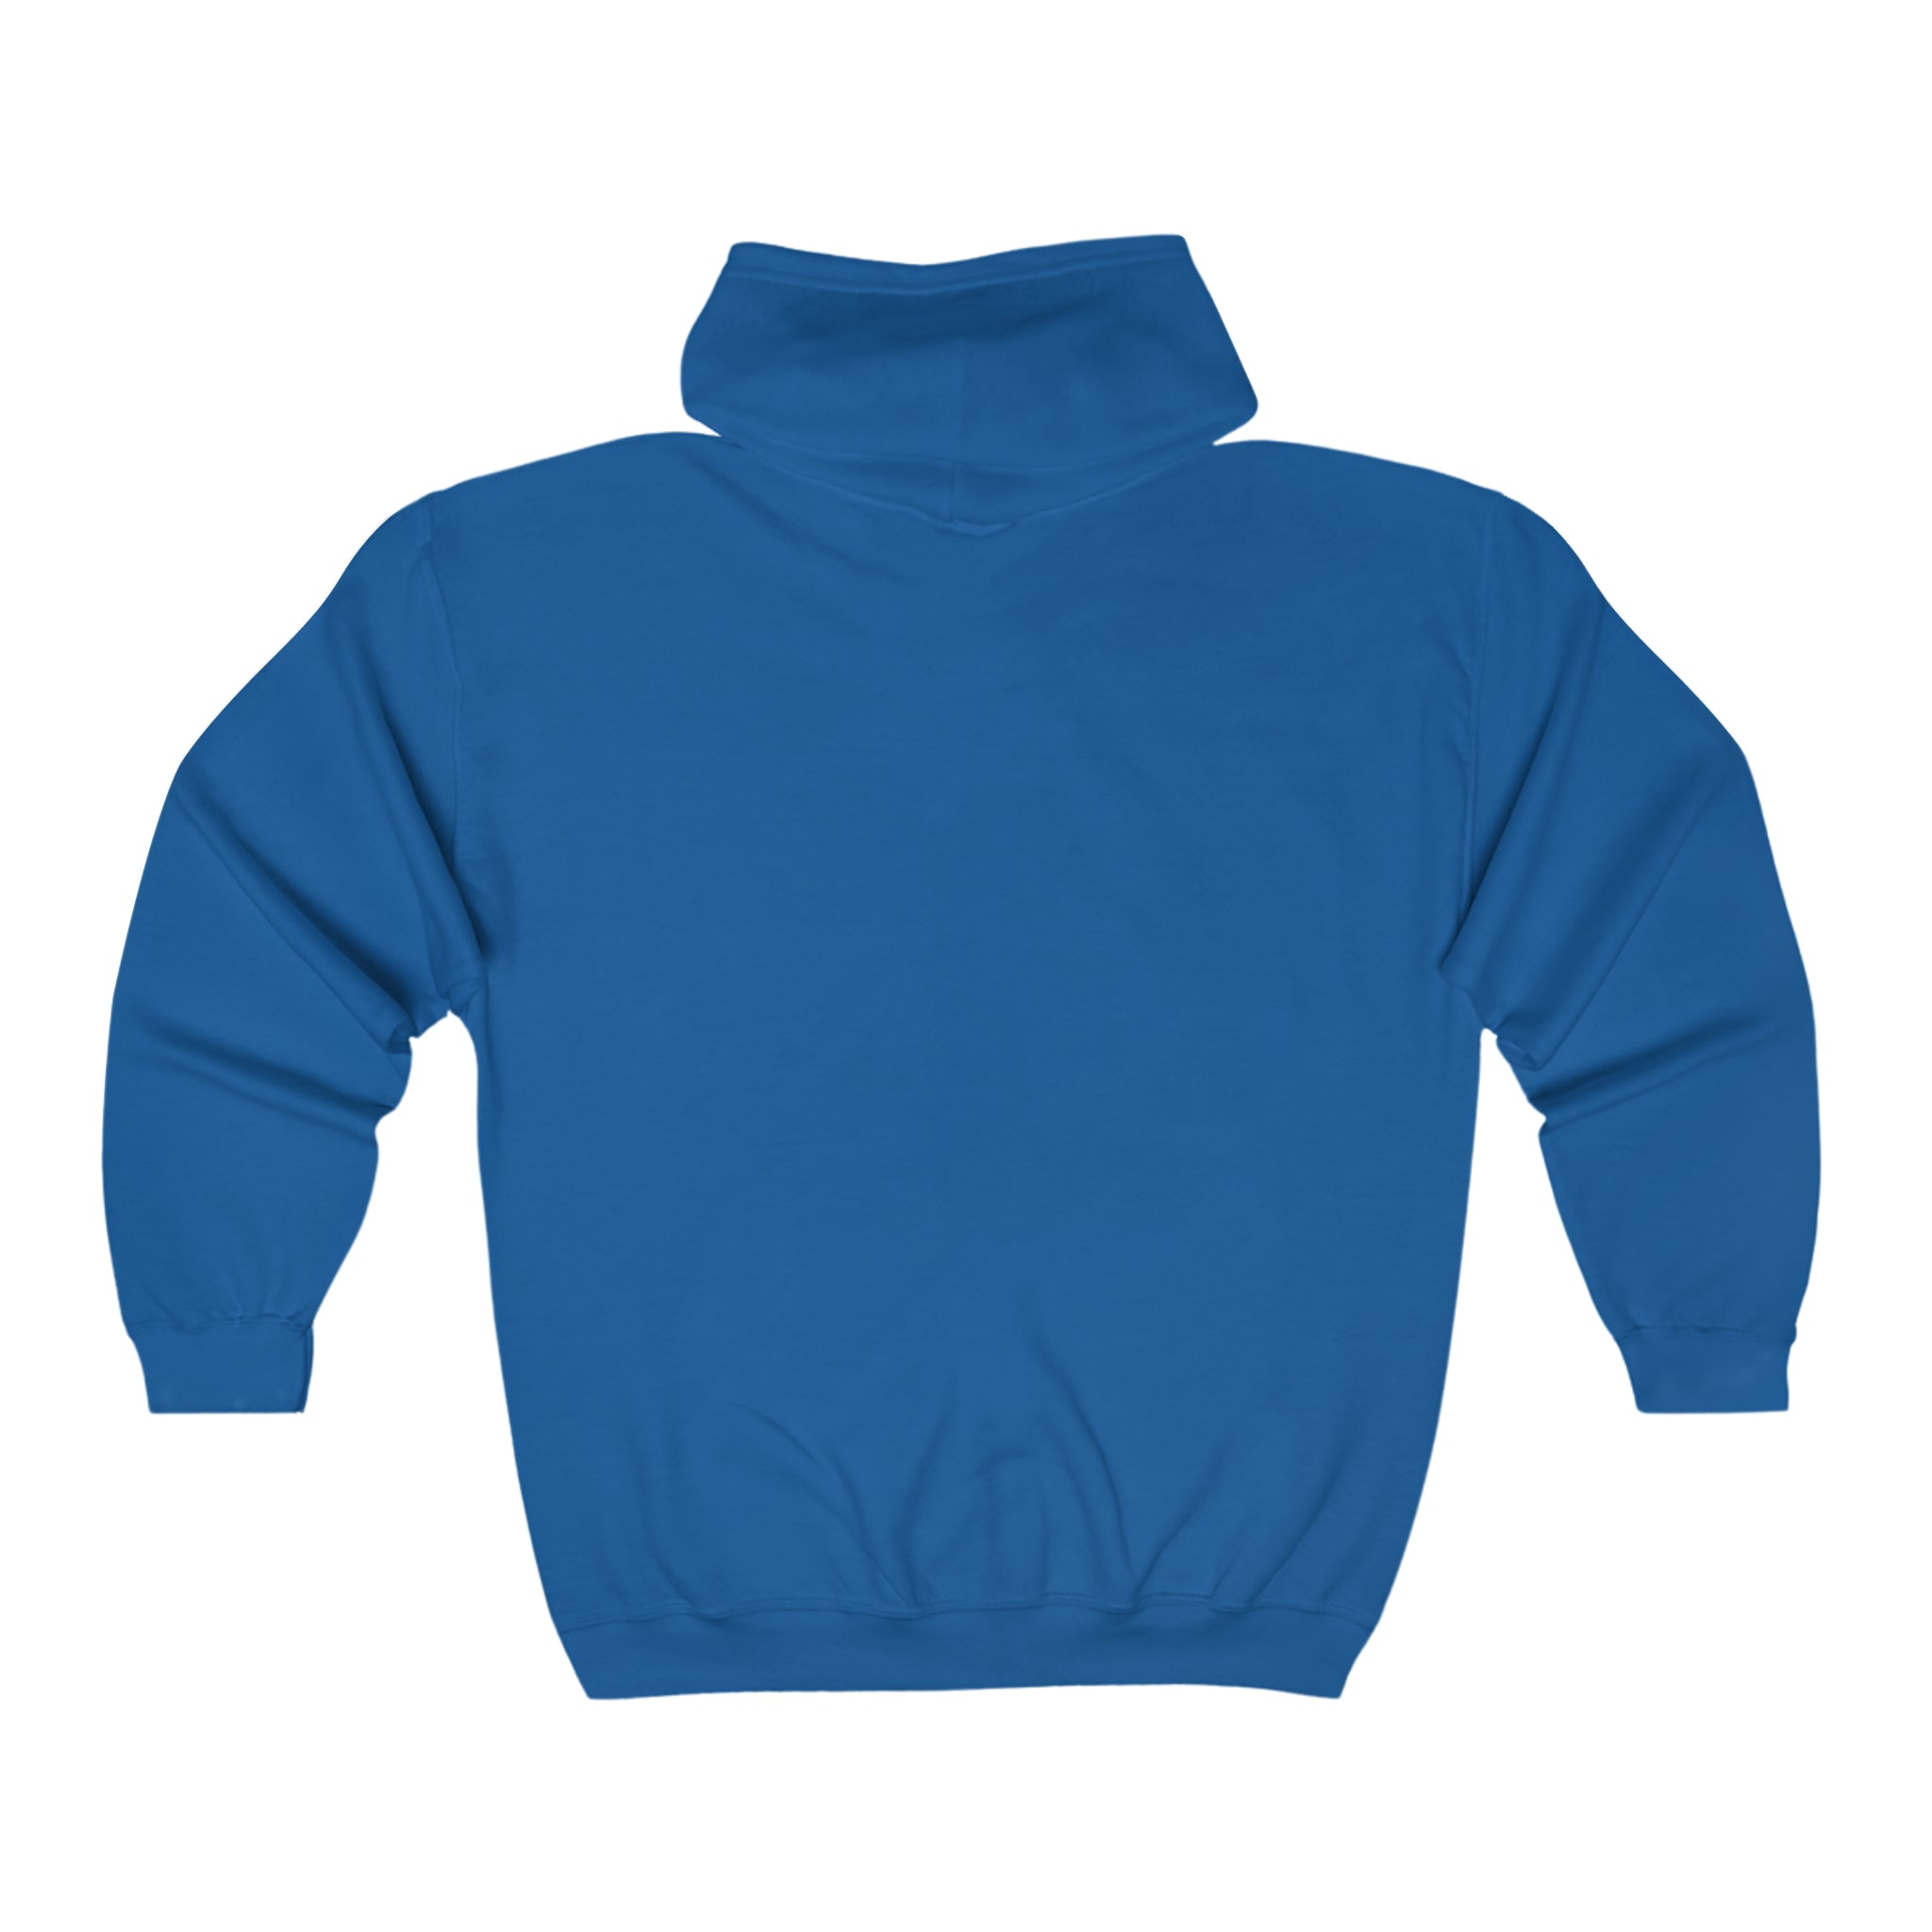 TigerCo Marketing Official Unisex Heavy Blend™ Full Zip Hooded Sweatshirt